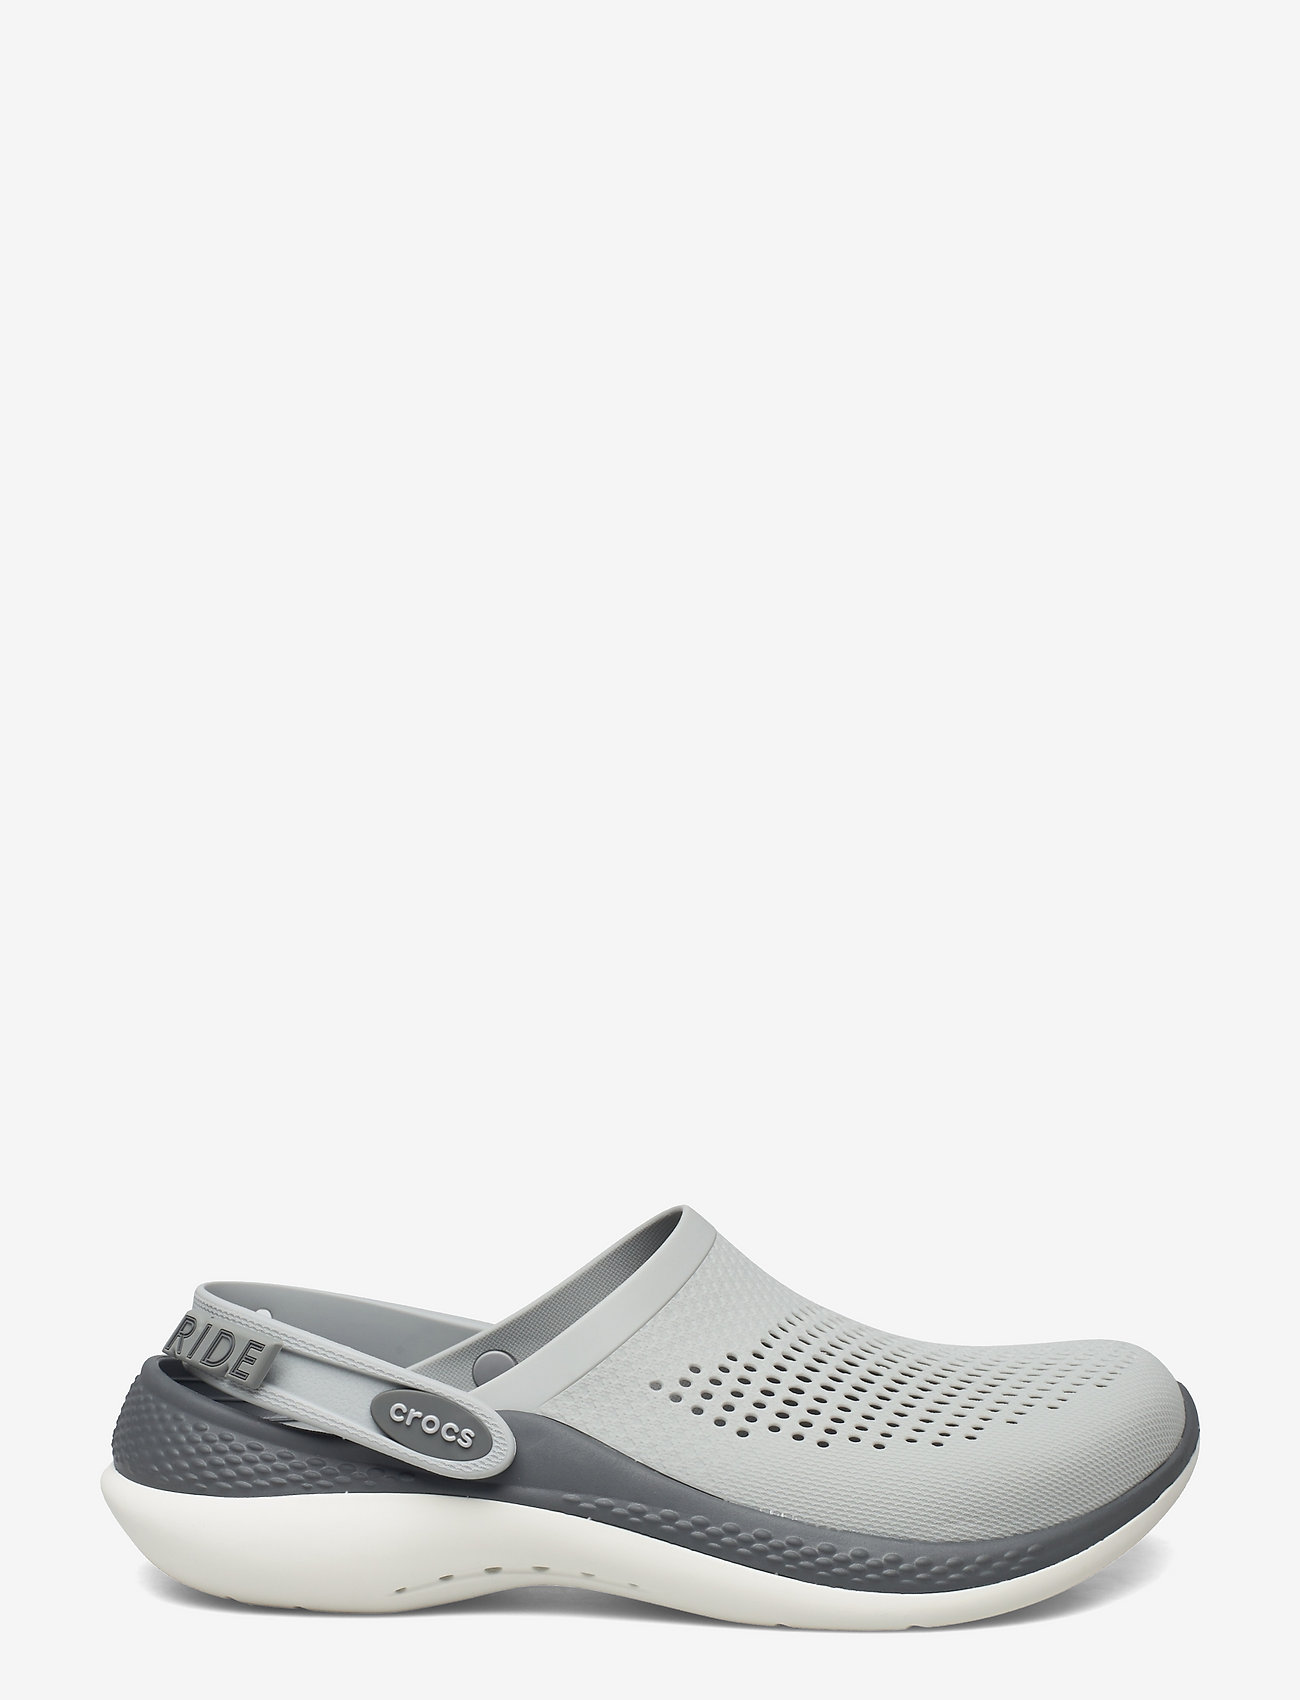 Crocs - LiteRide 360 Clog - women - light grey/slate grey - 1